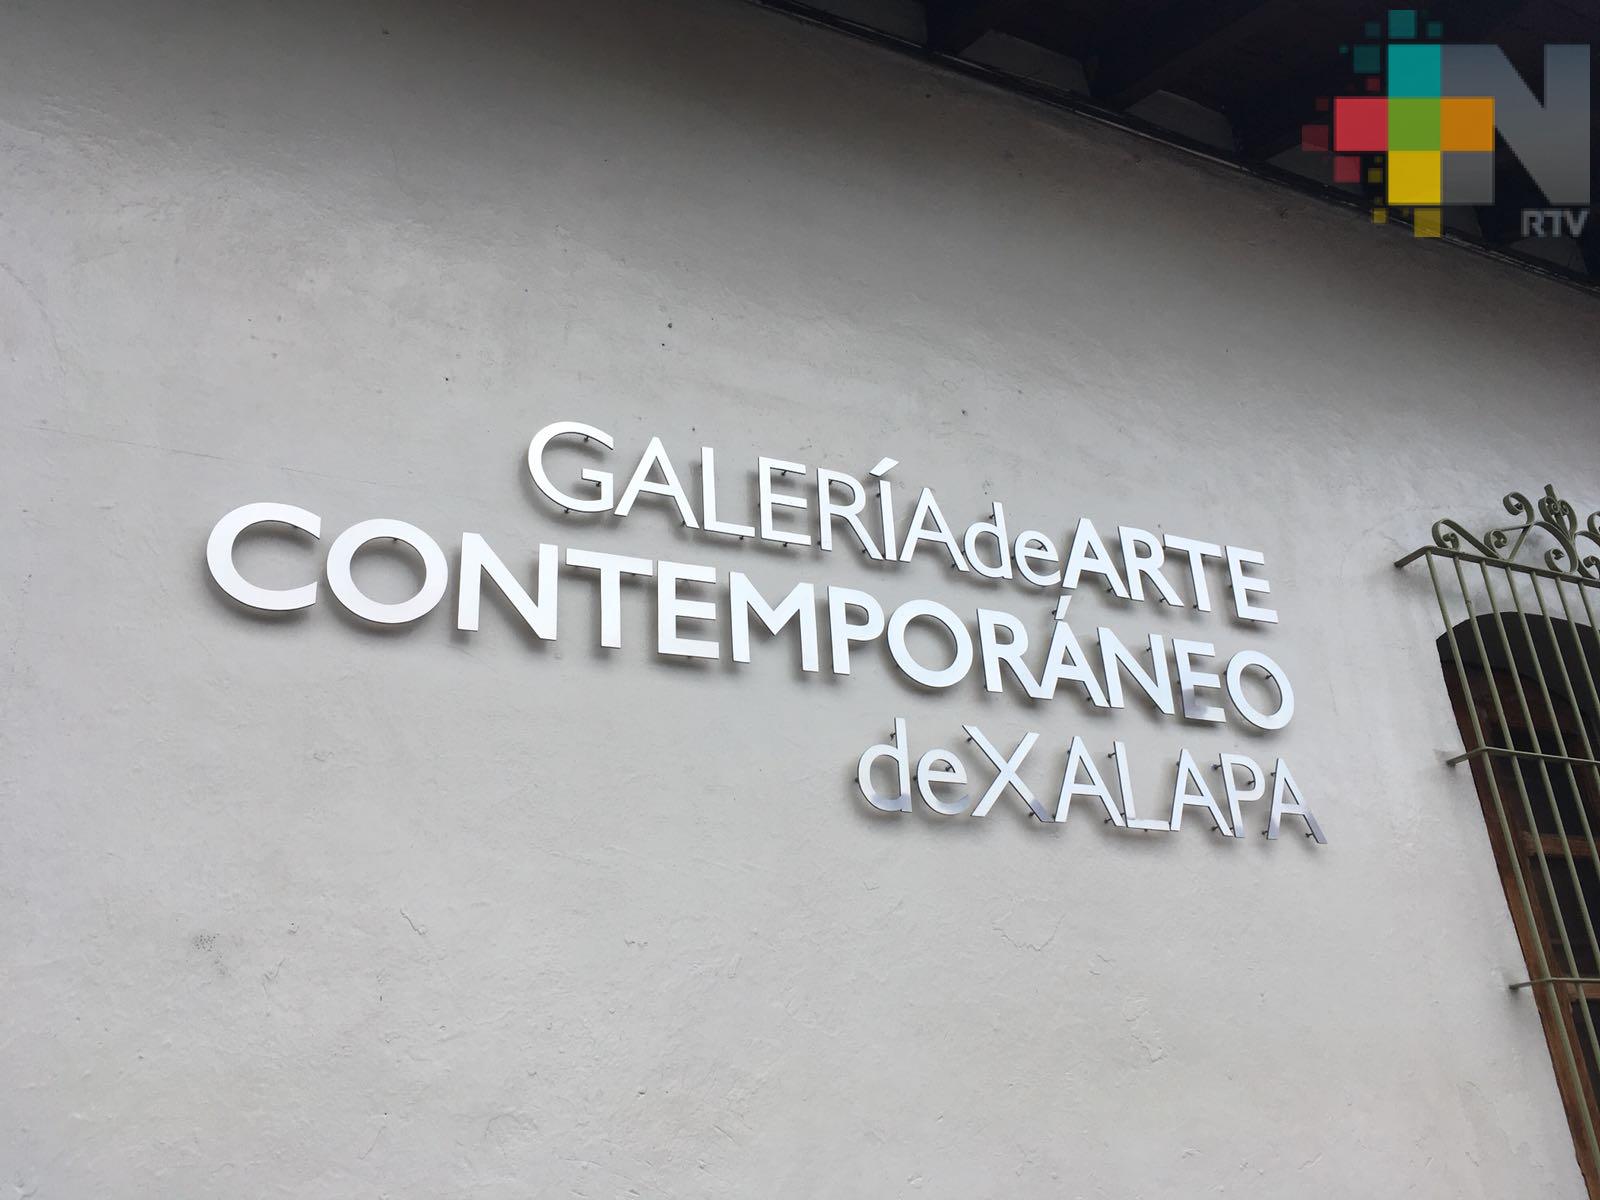 Continúan conversatorios en Galería de Arte Contemporáneo de Xalapa